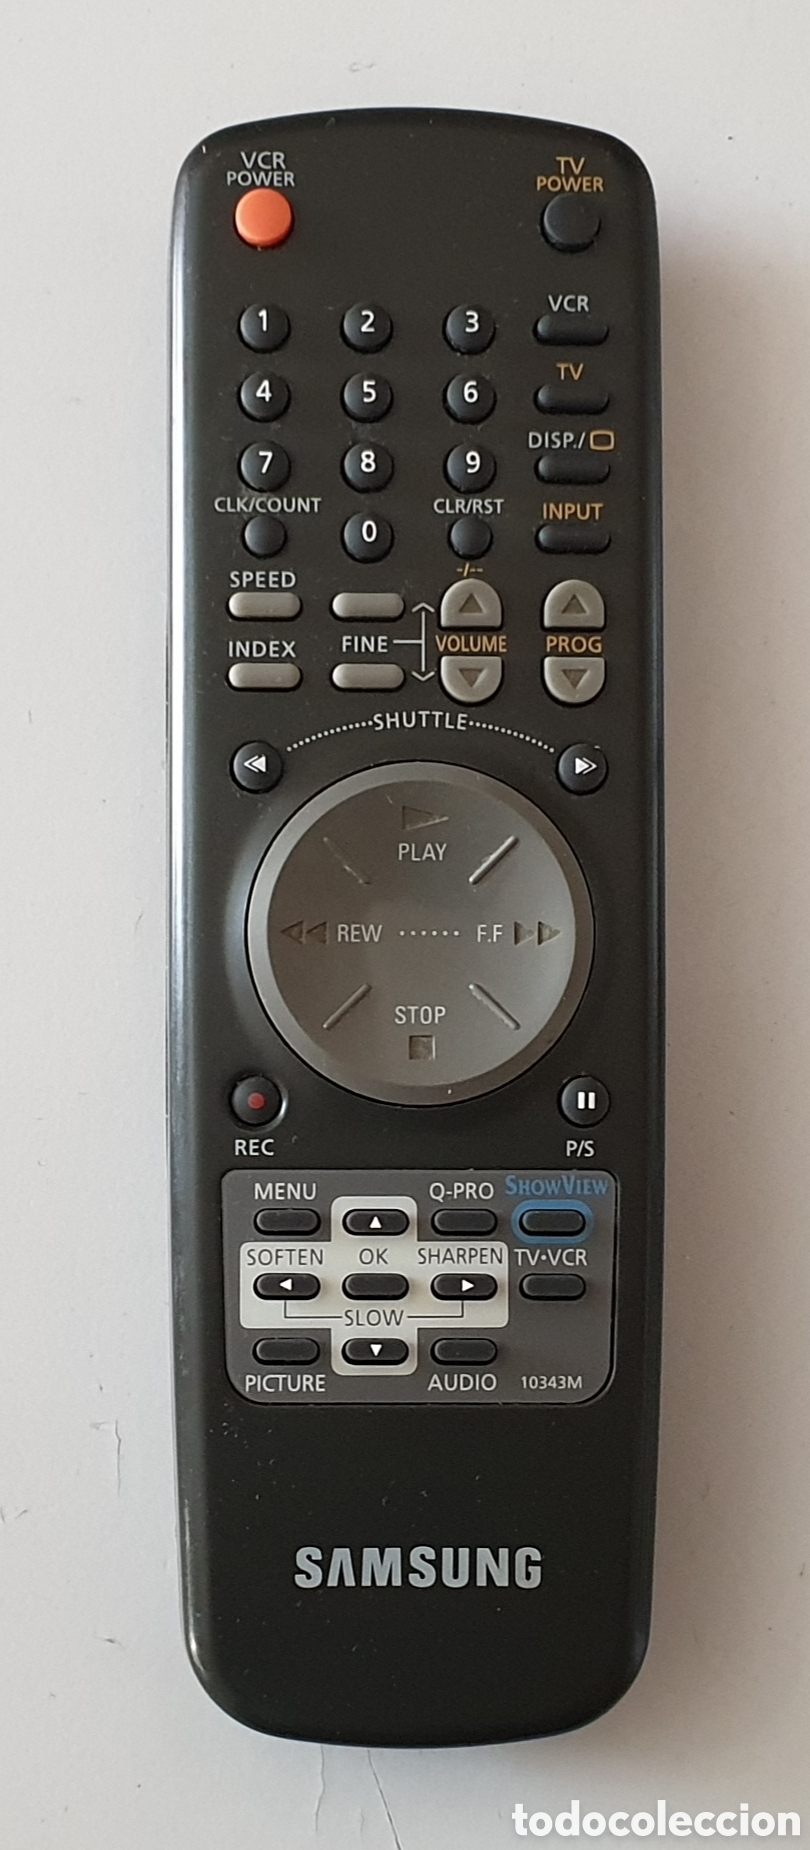 panasonic - original mando distancia tv vcr- ve - Buy Second-hand  electronic articles on todocoleccion